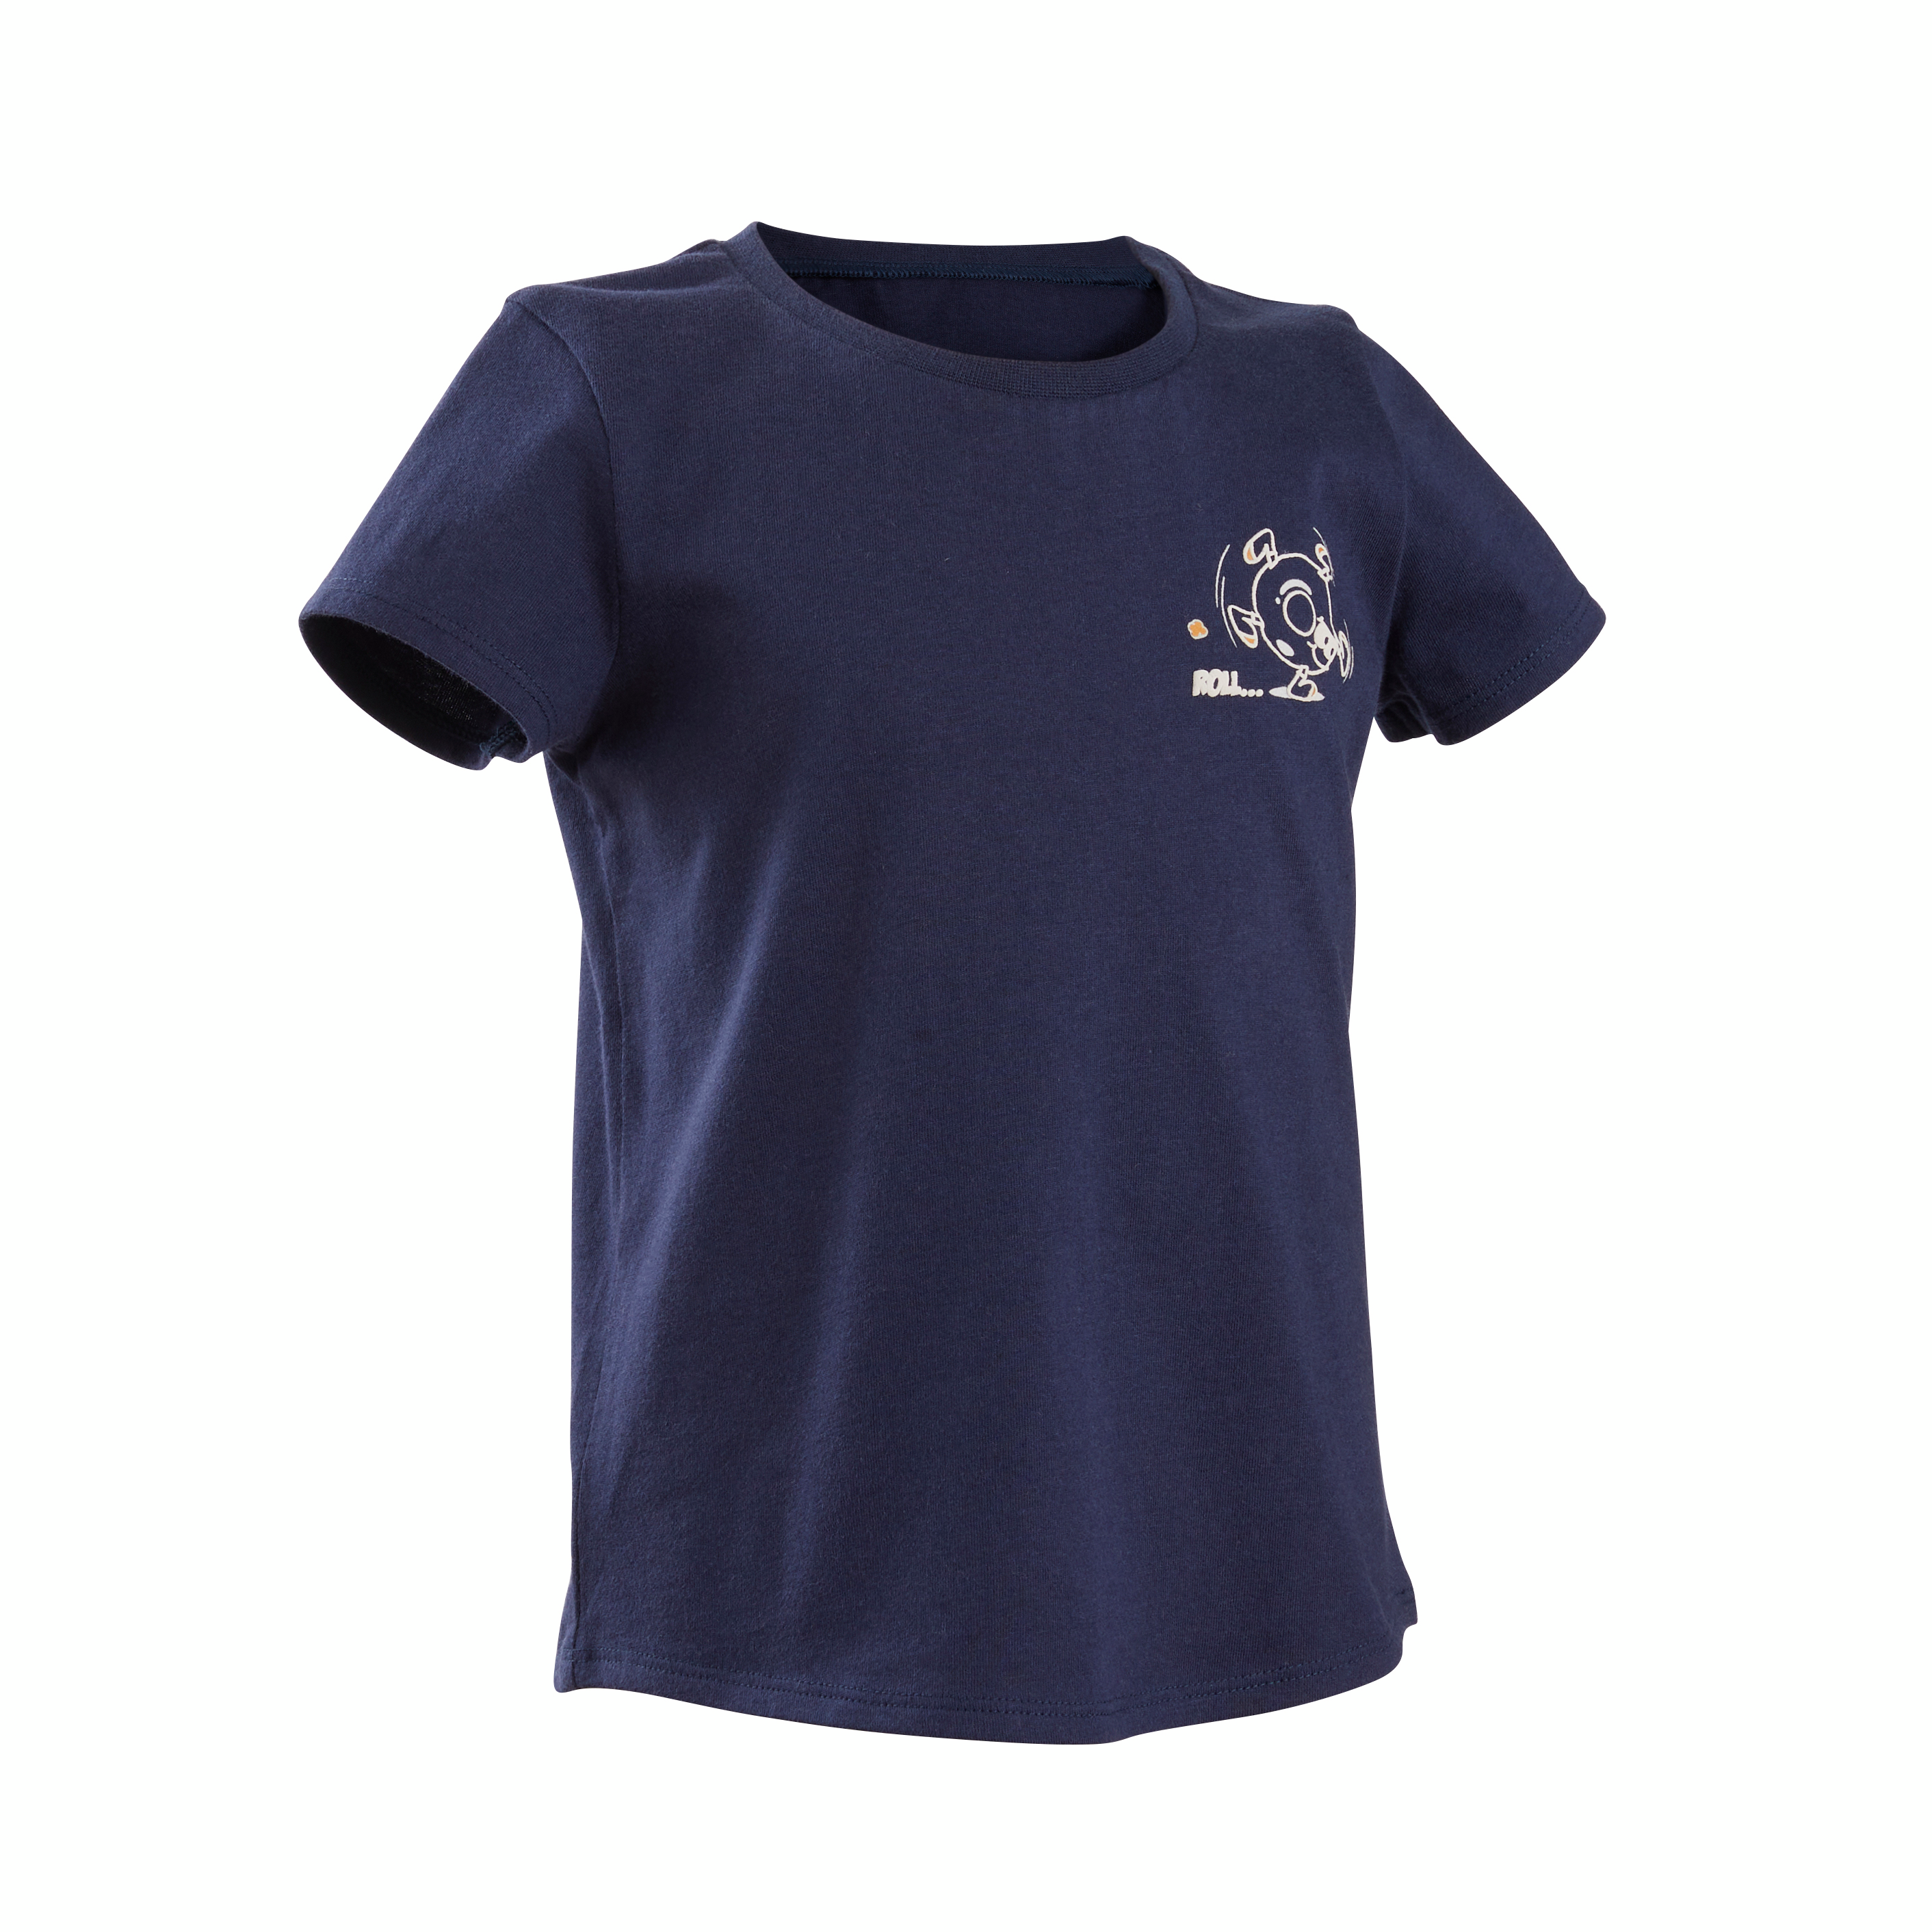 T-shirt bébé coton - Basique Bleu Marine